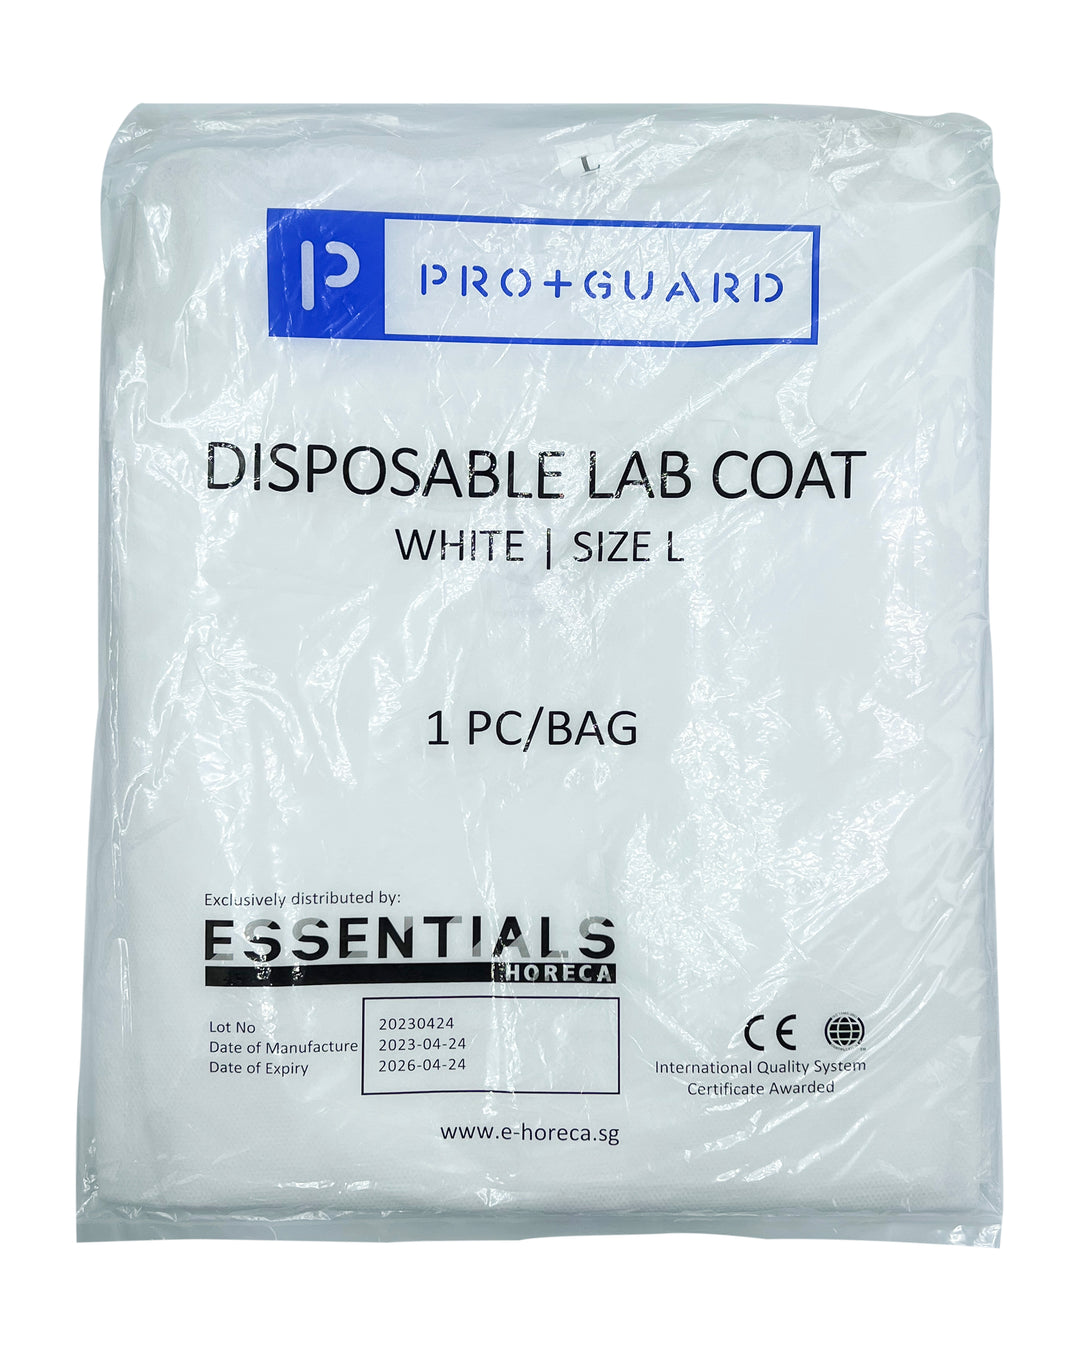 Pro+Guard Disposable Lab Coat (White)